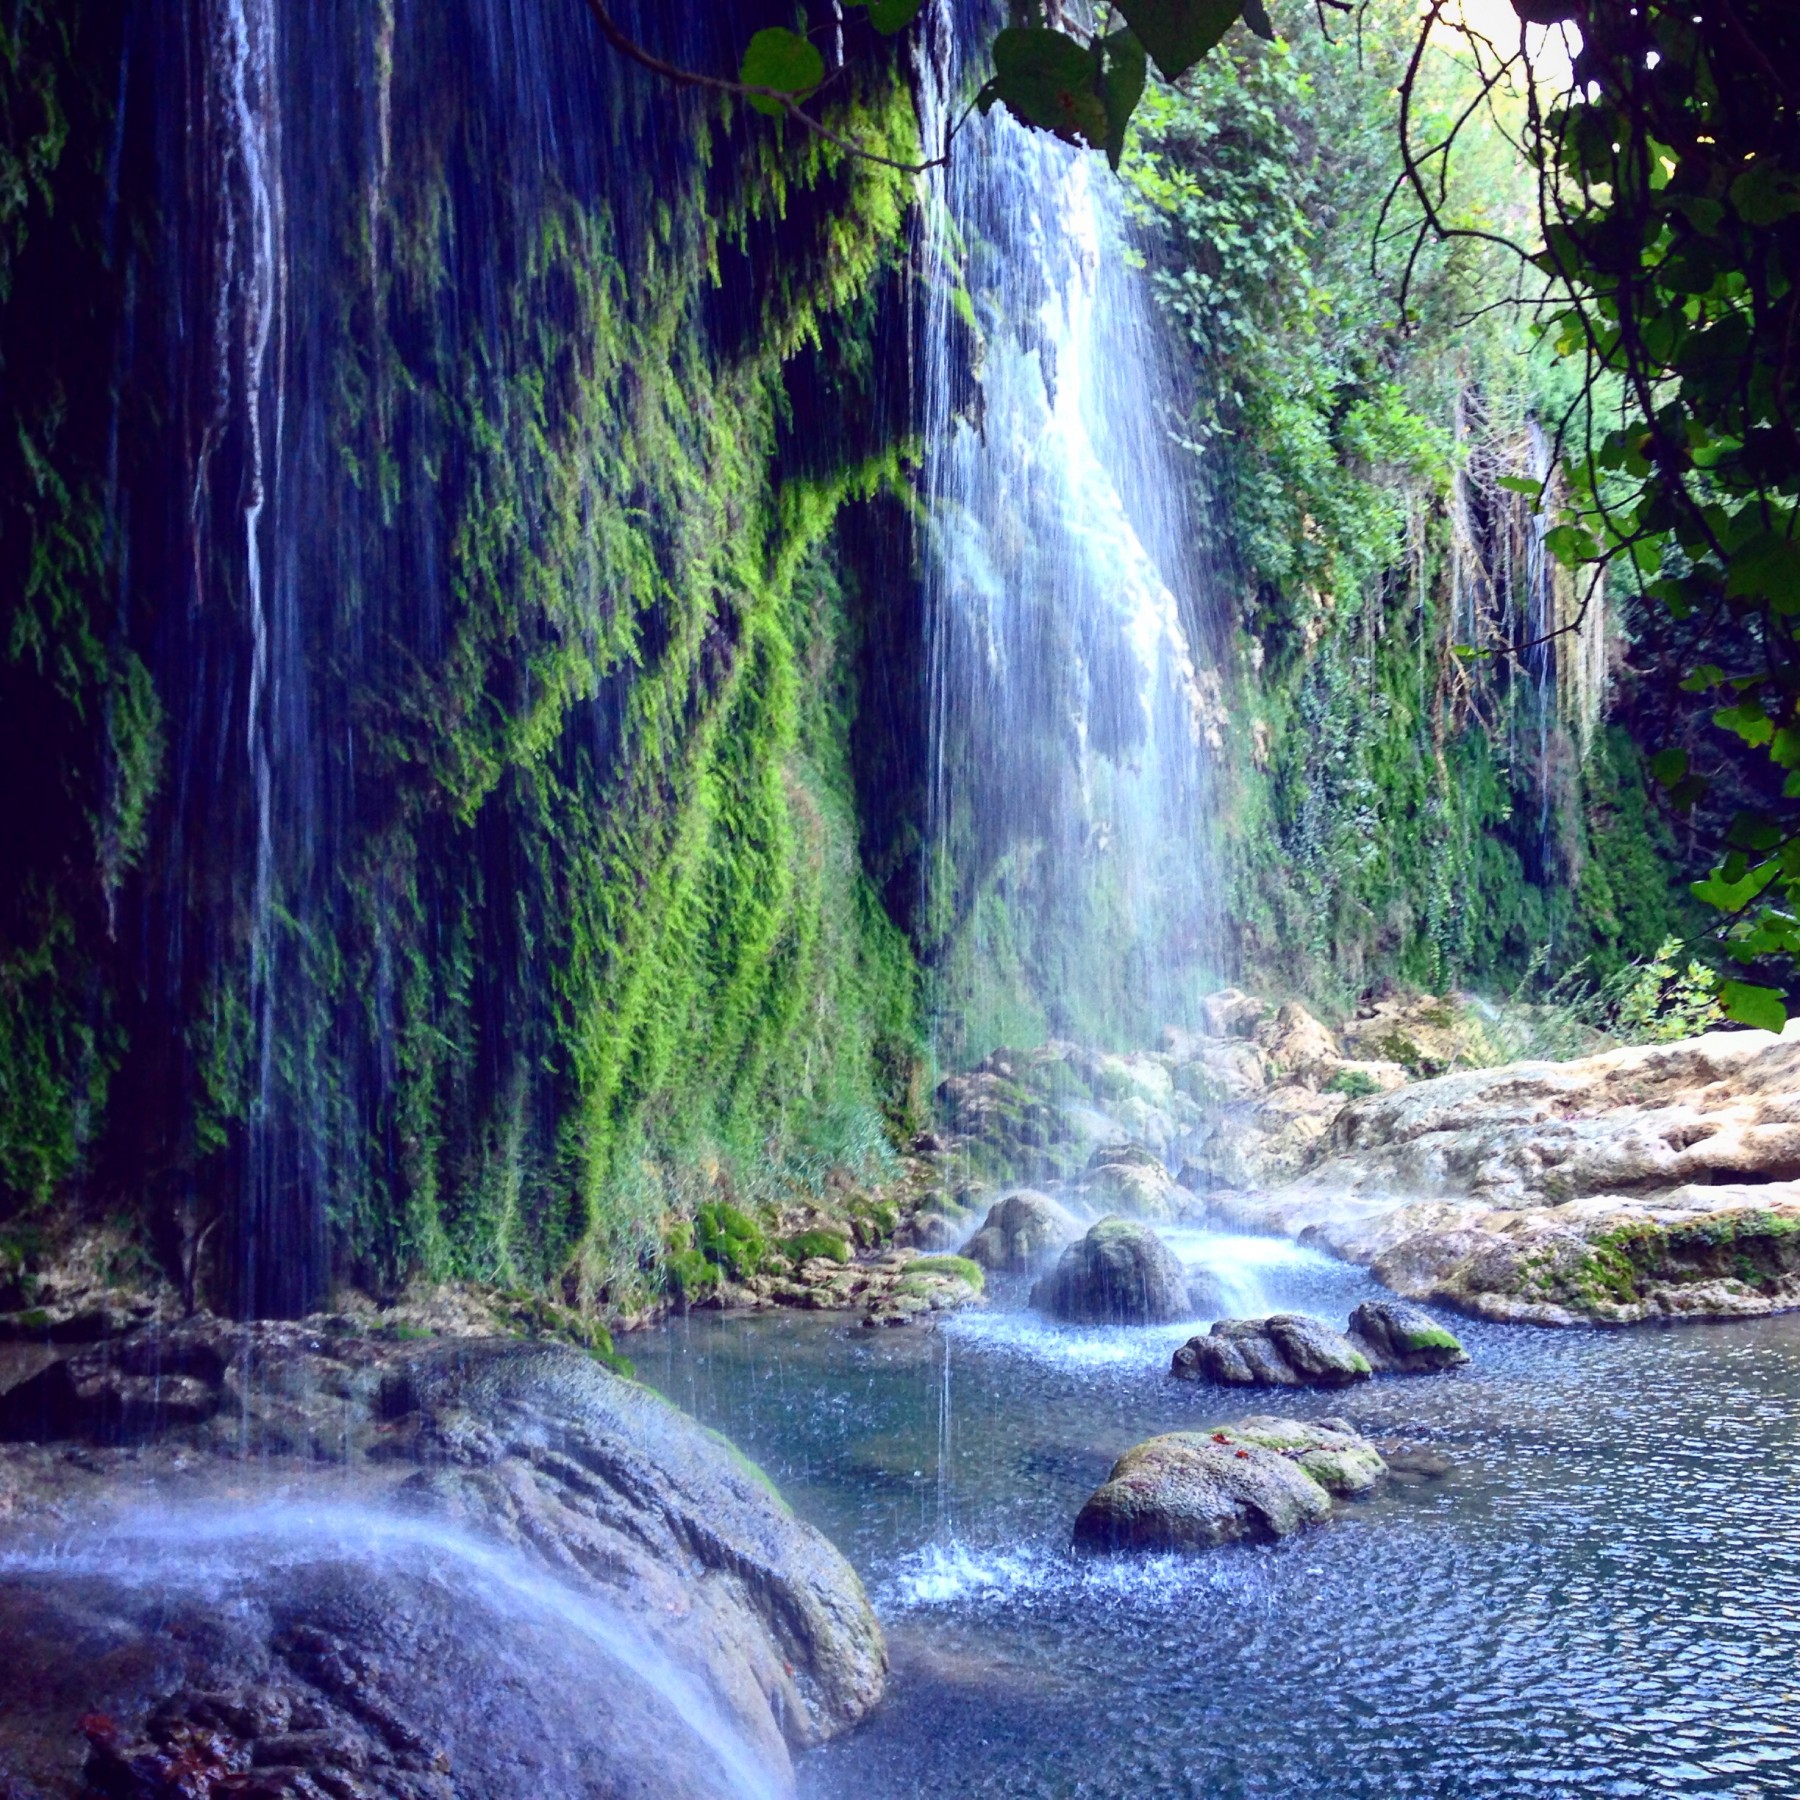 Kursunlu waterfalls, Antalya, Turkey